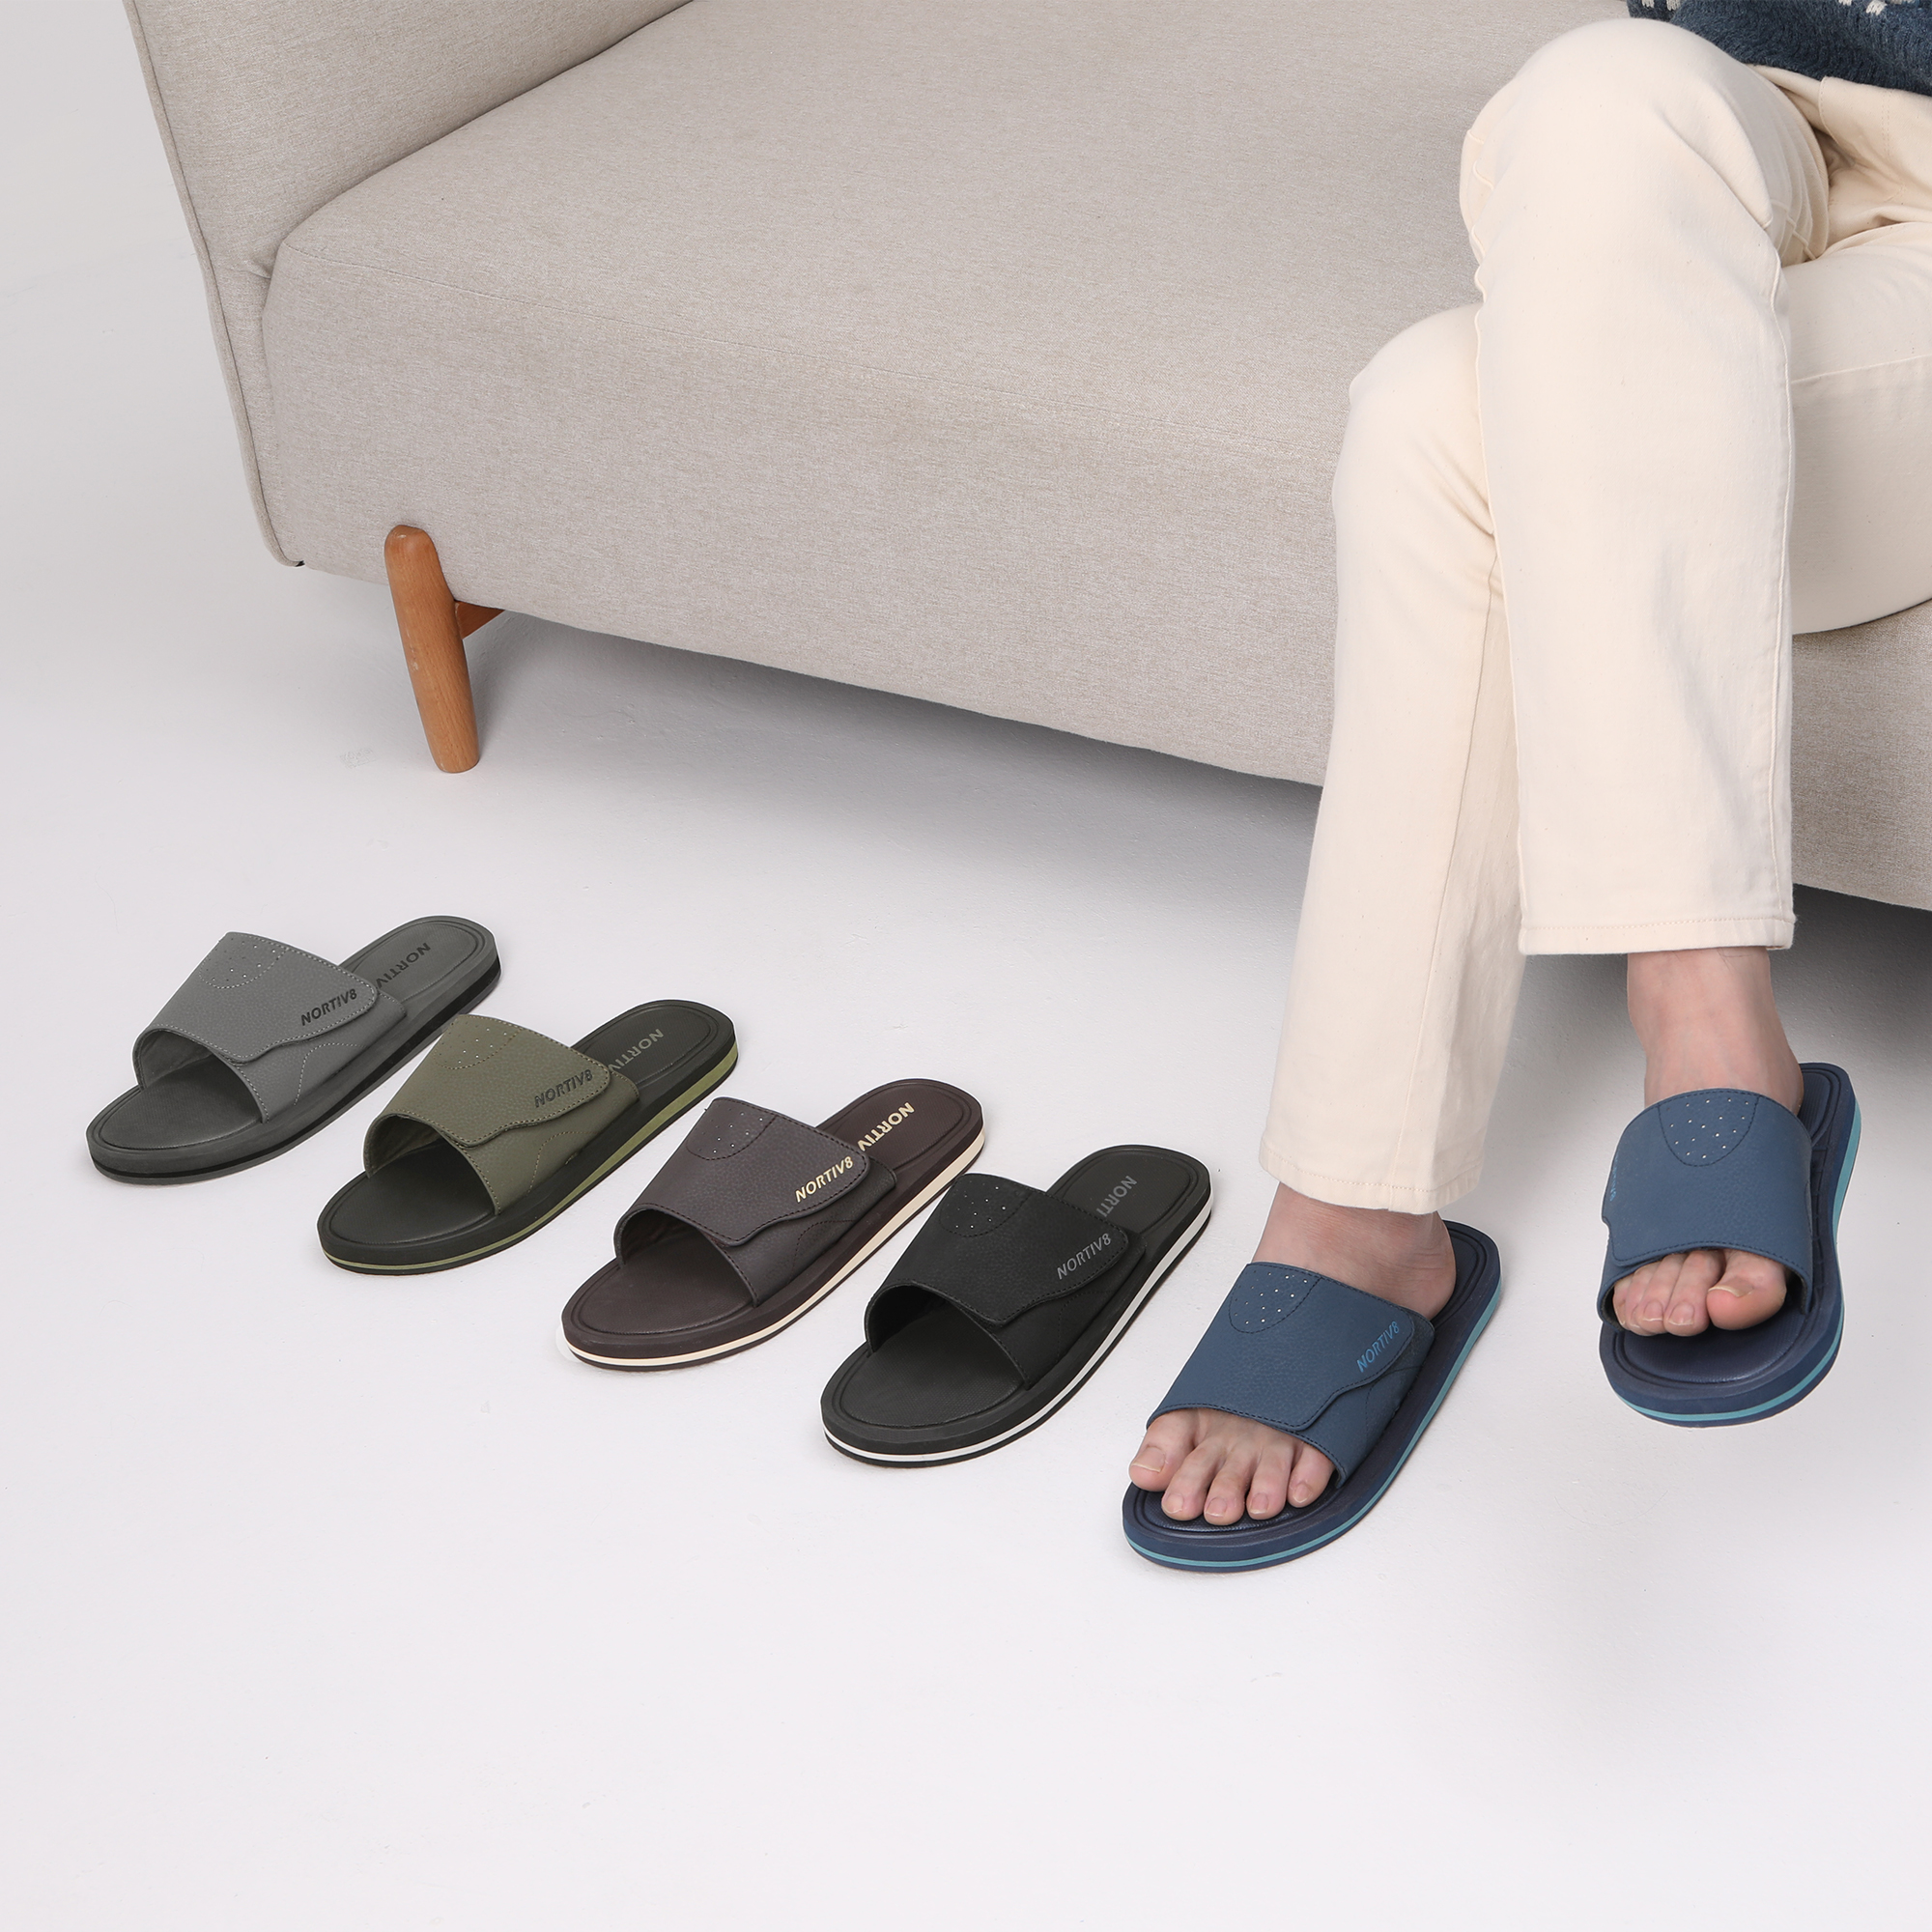 Nortiv8 Men's Memory Foam Adjustable Slide Sandals Comfort Lightweight Summer Beach Sandals Shoes FUSION NAVY Size 13 - image 4 of 5